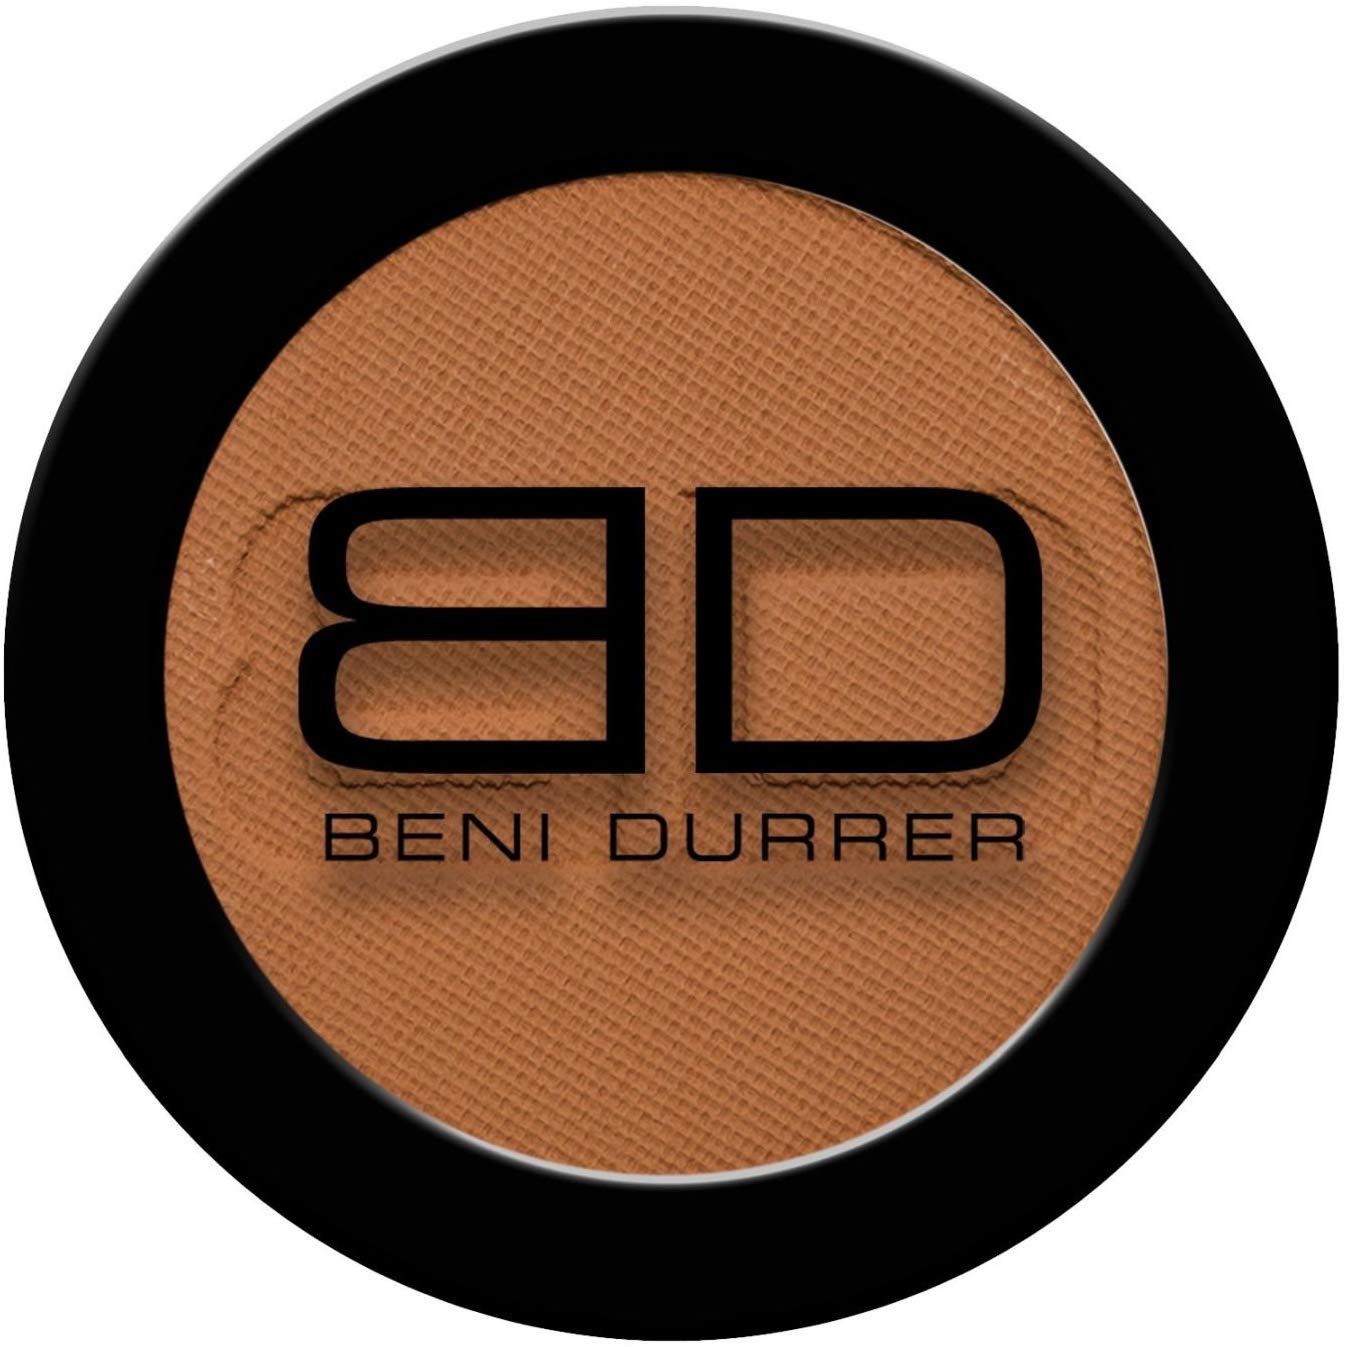 Beni Durrer Powder Pigments